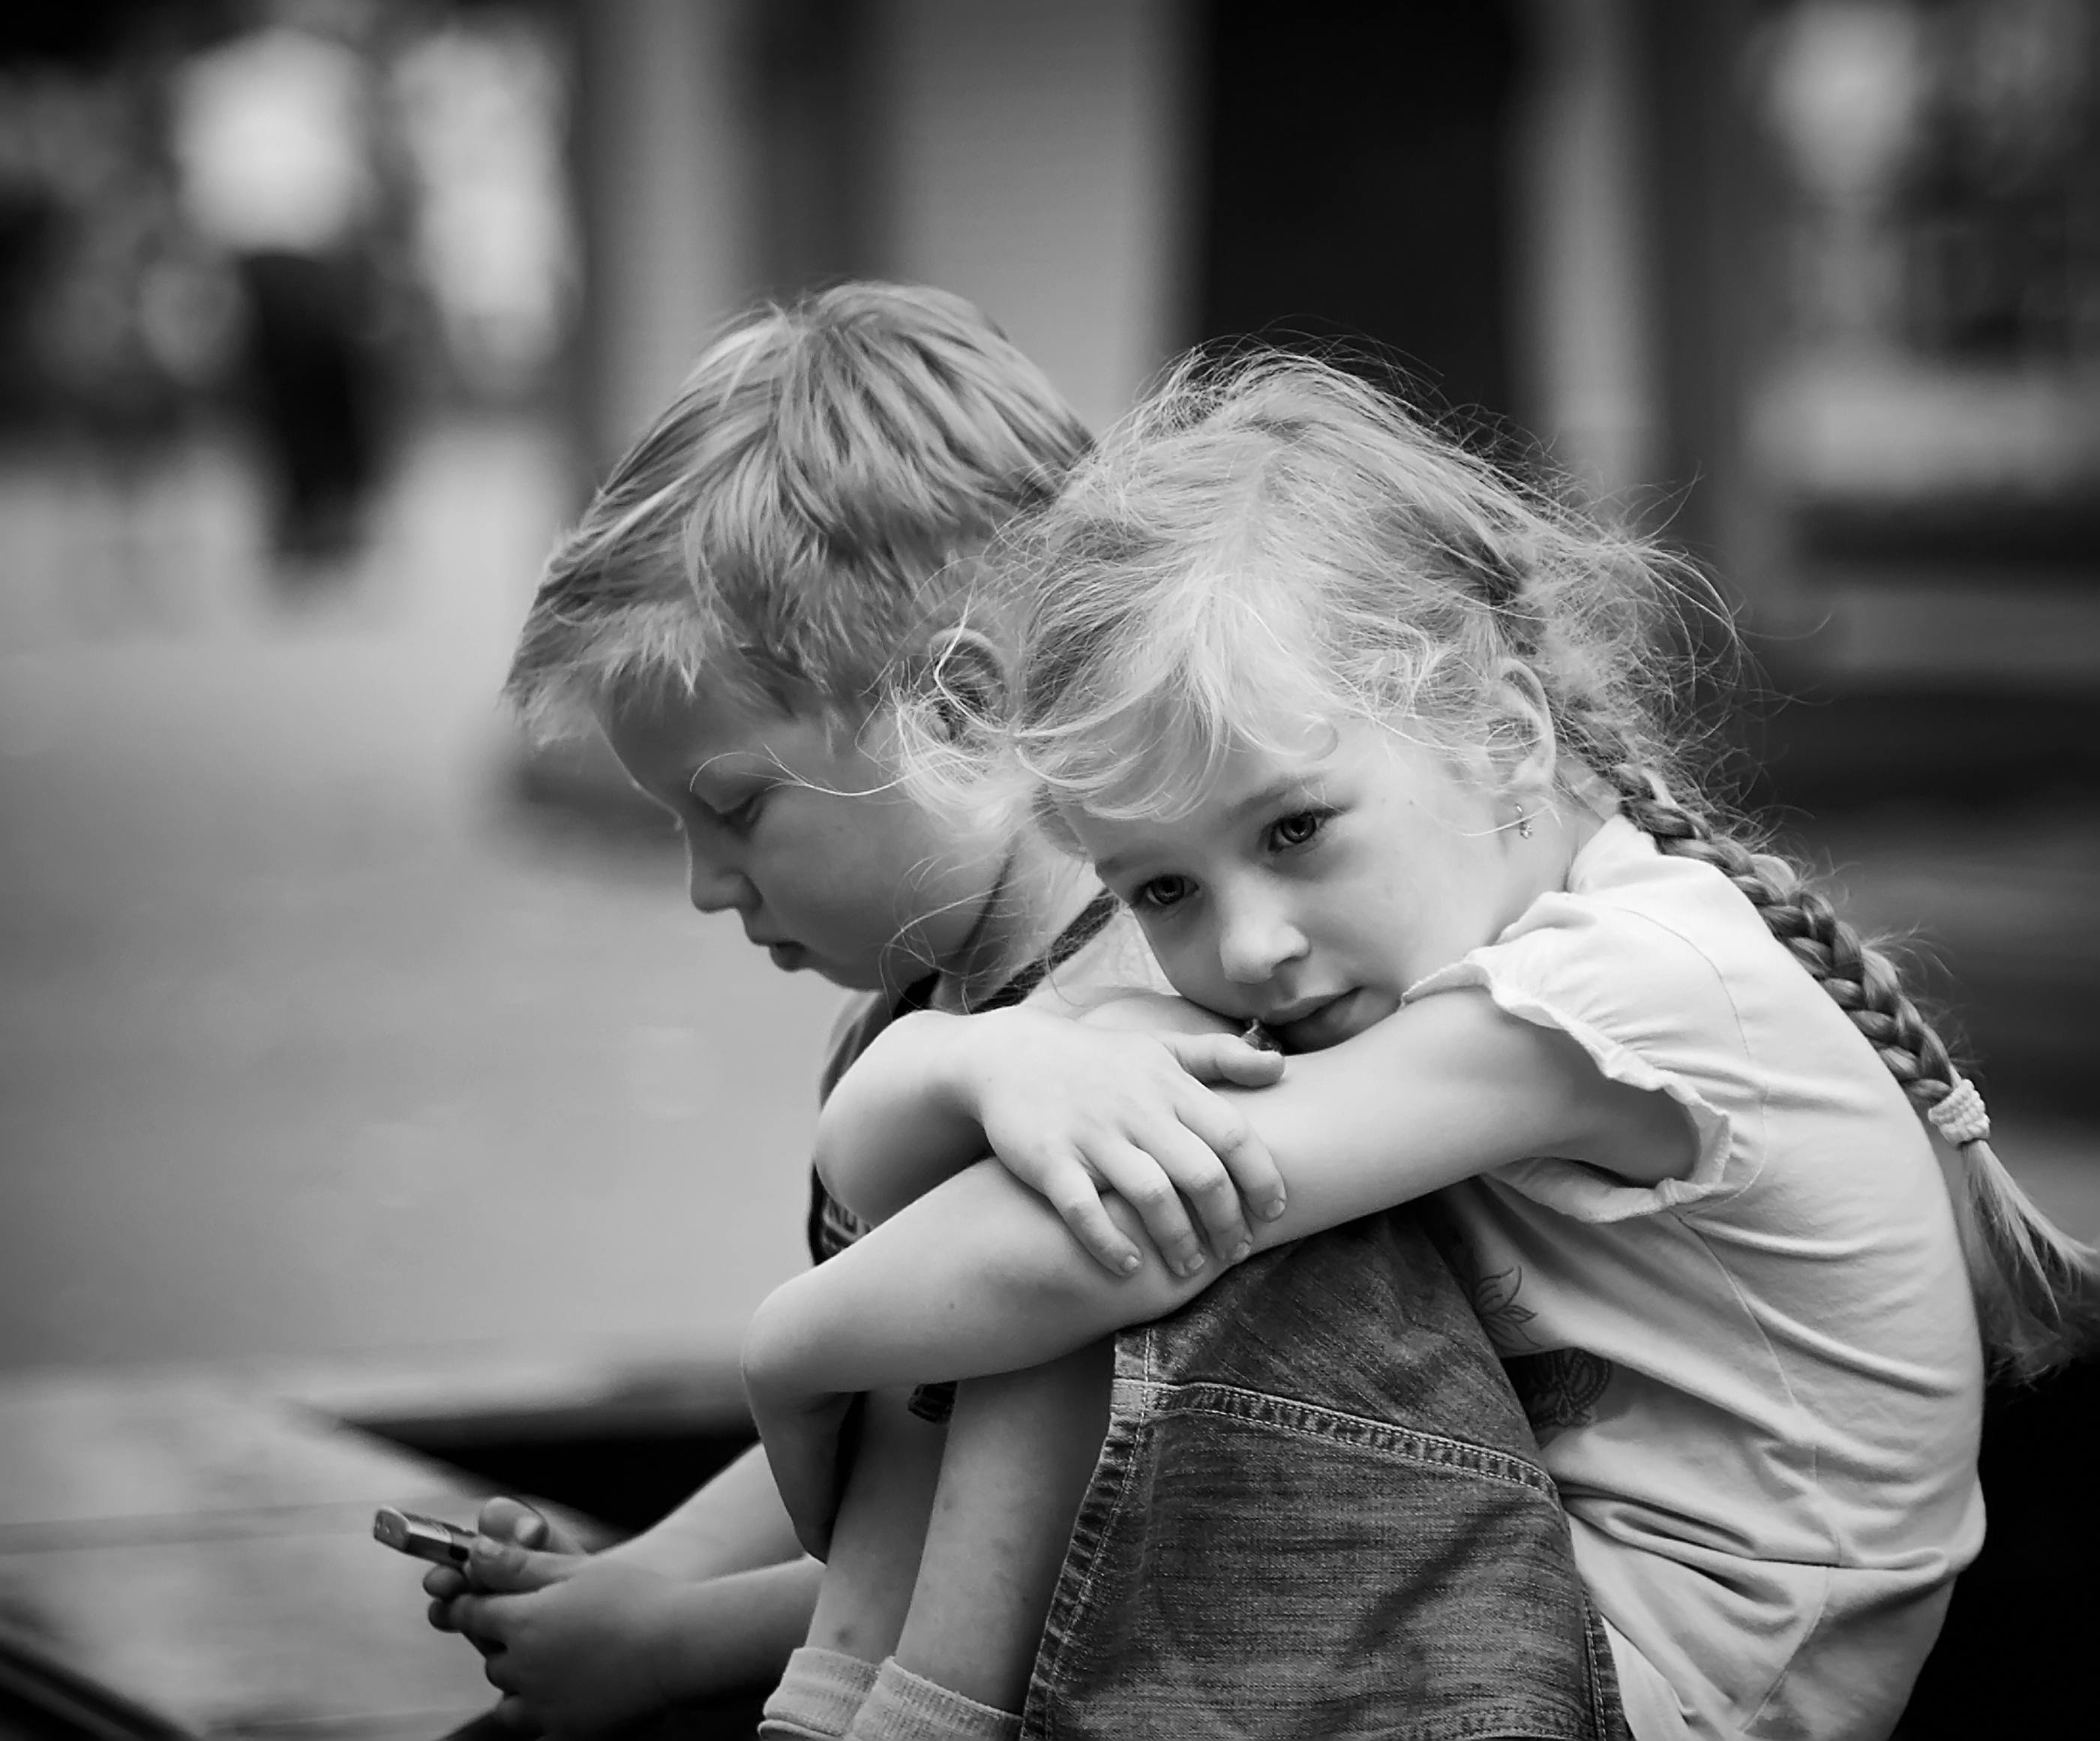 sad emotional girl and boy